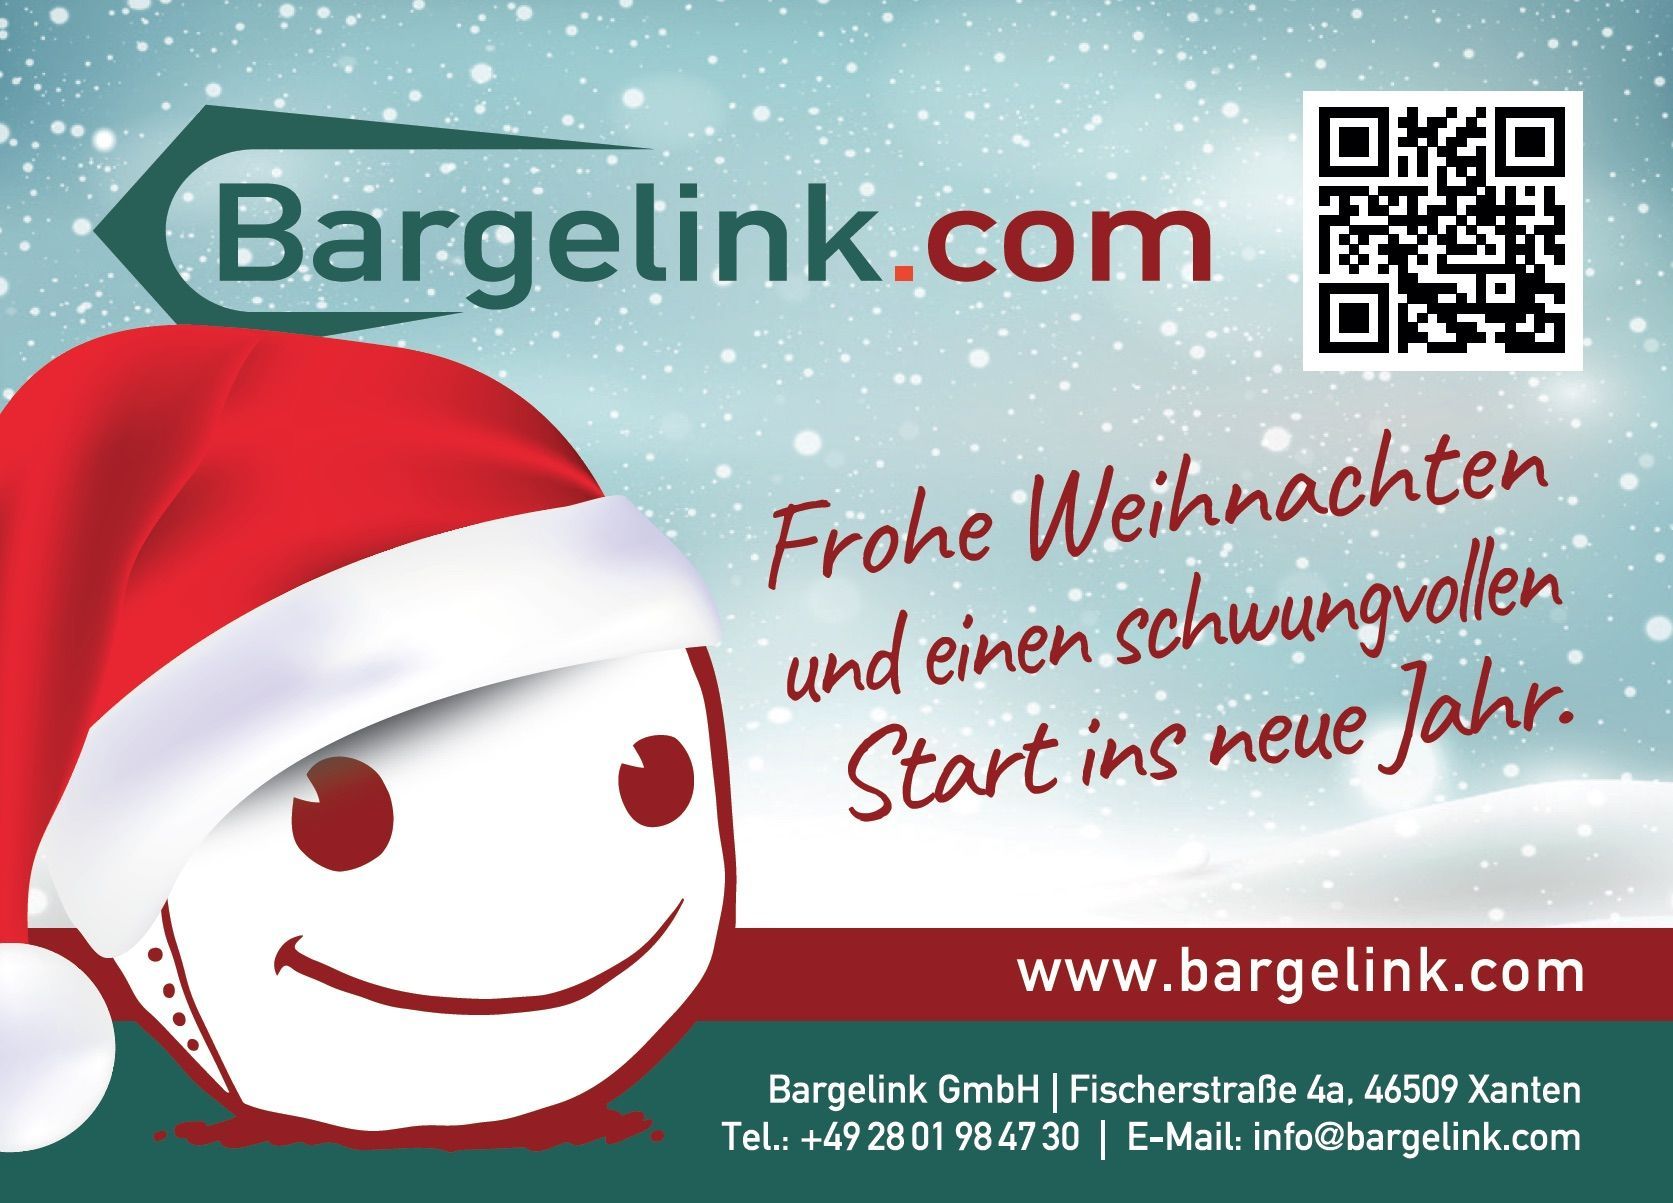 Bargelink GmbH - Hauptsitz Deutschland - Xanten